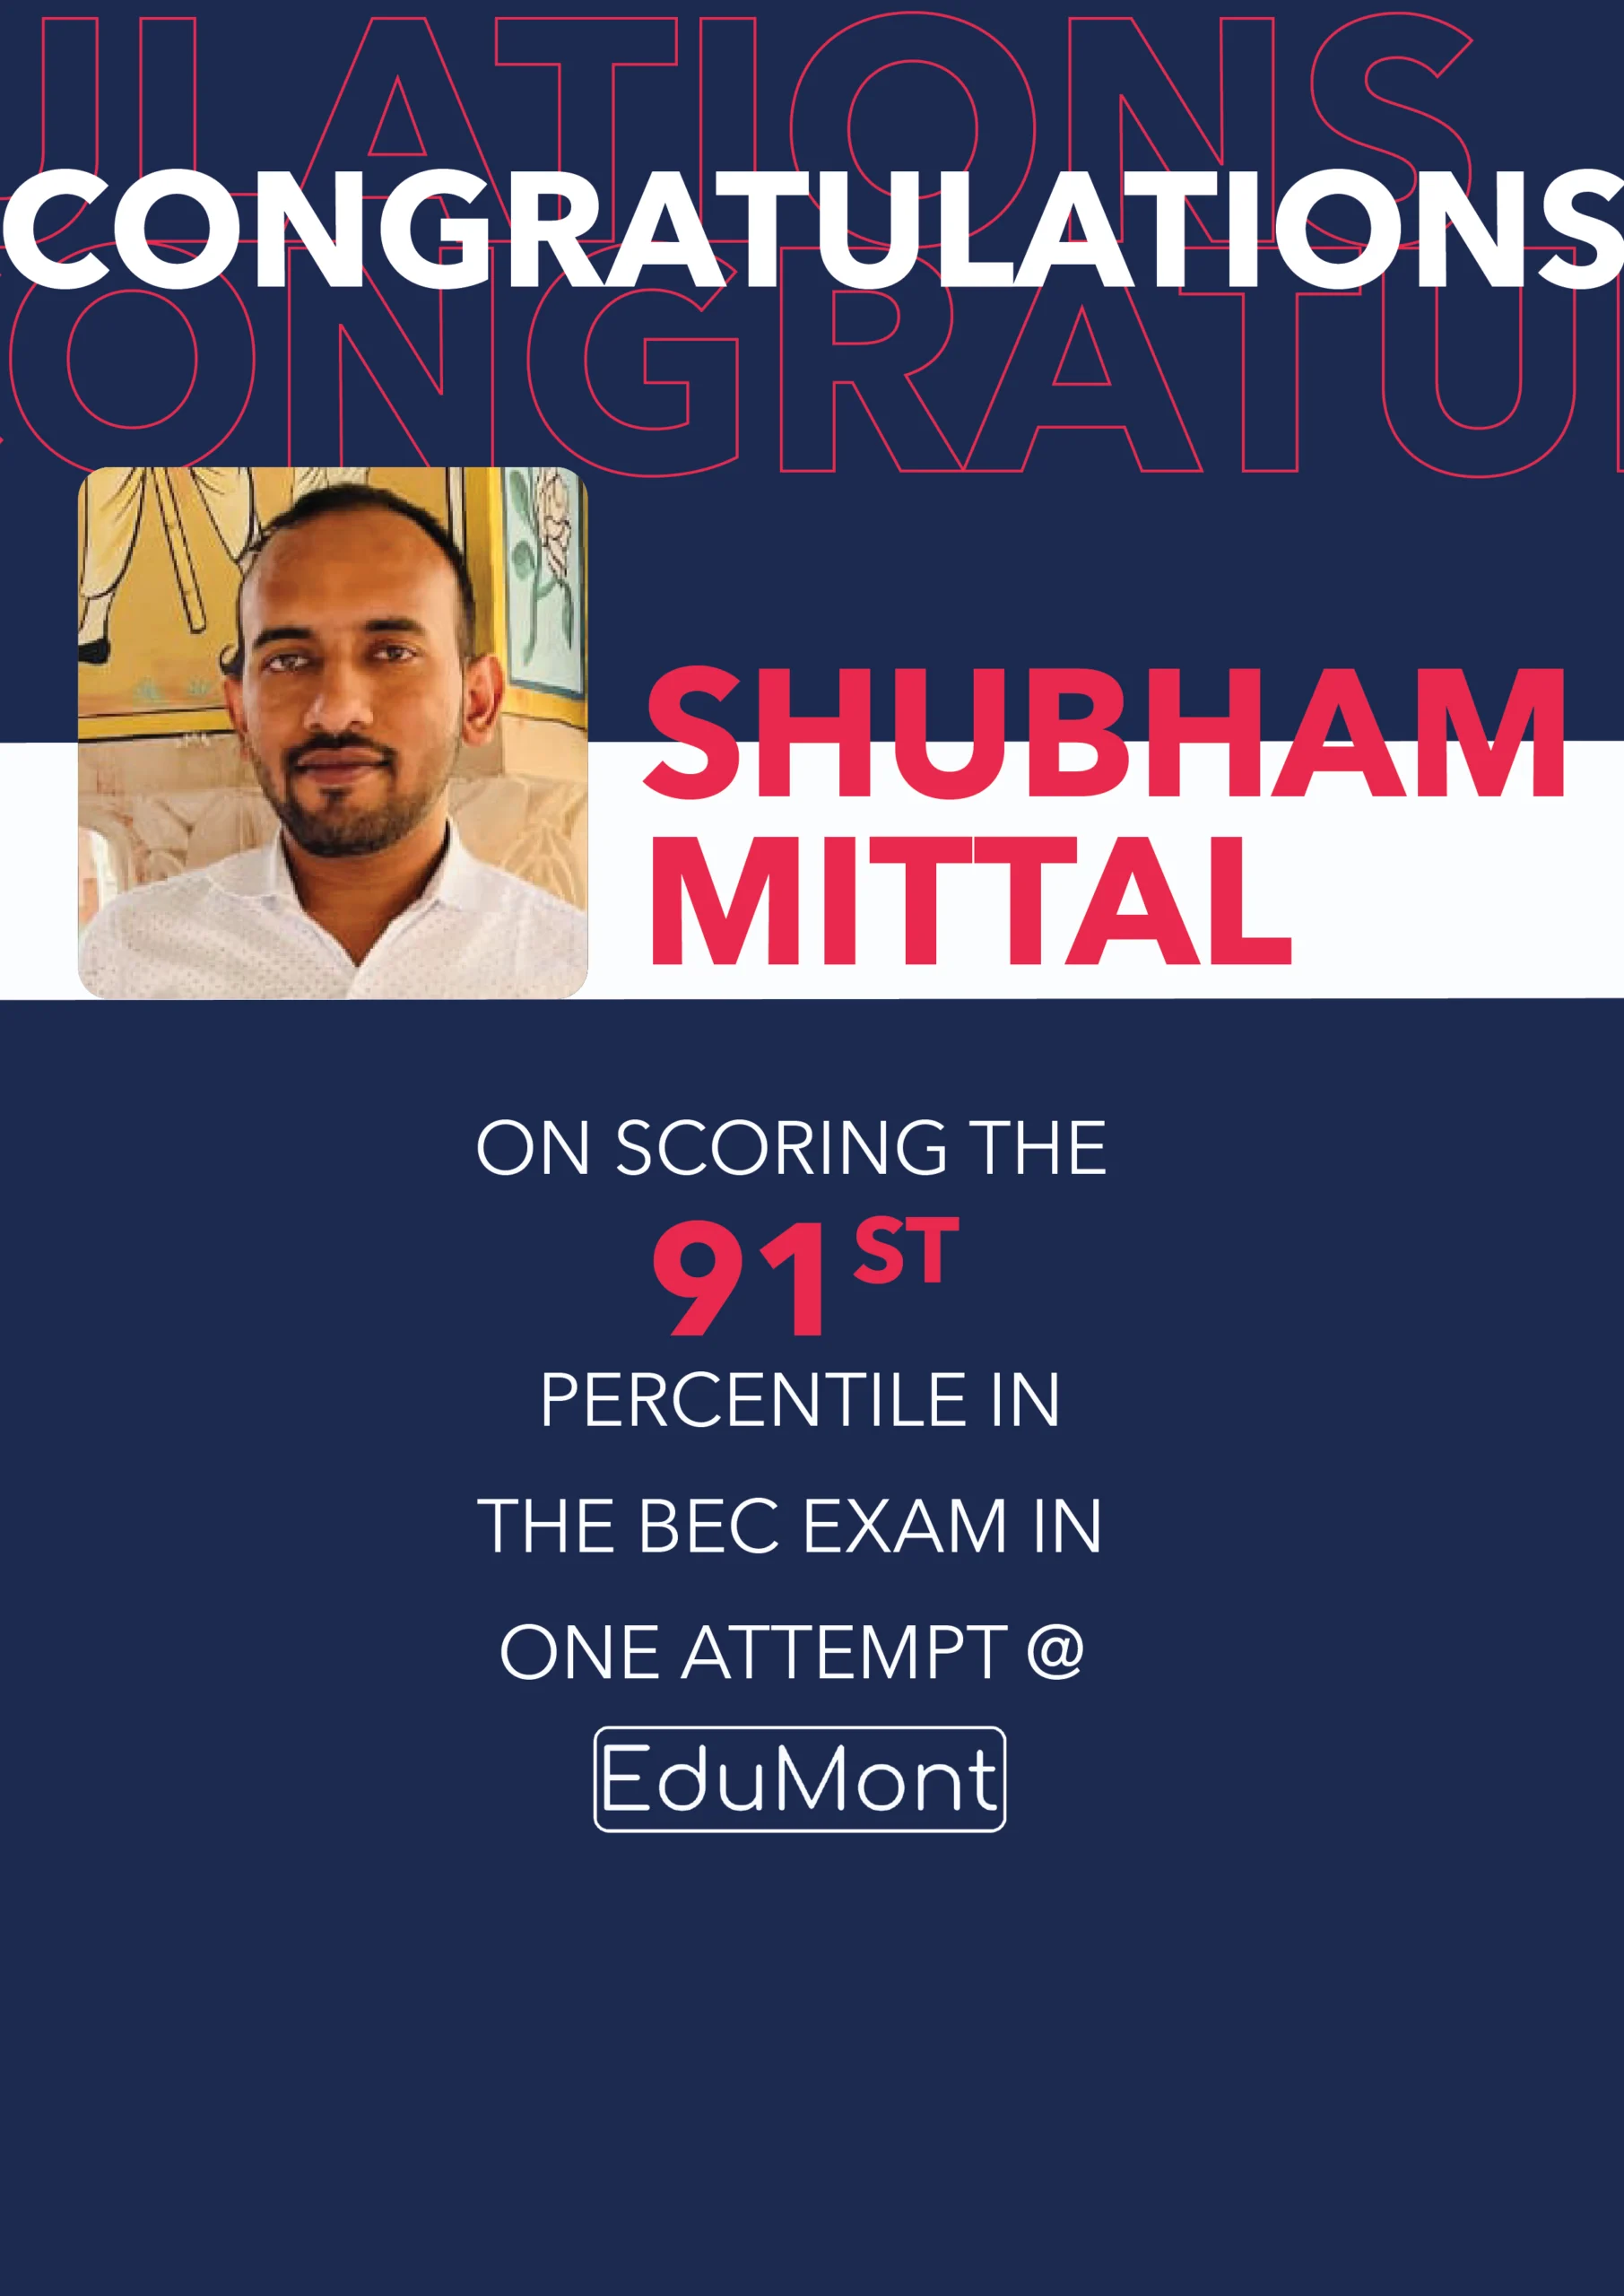 Congratulations Shubham Mittal